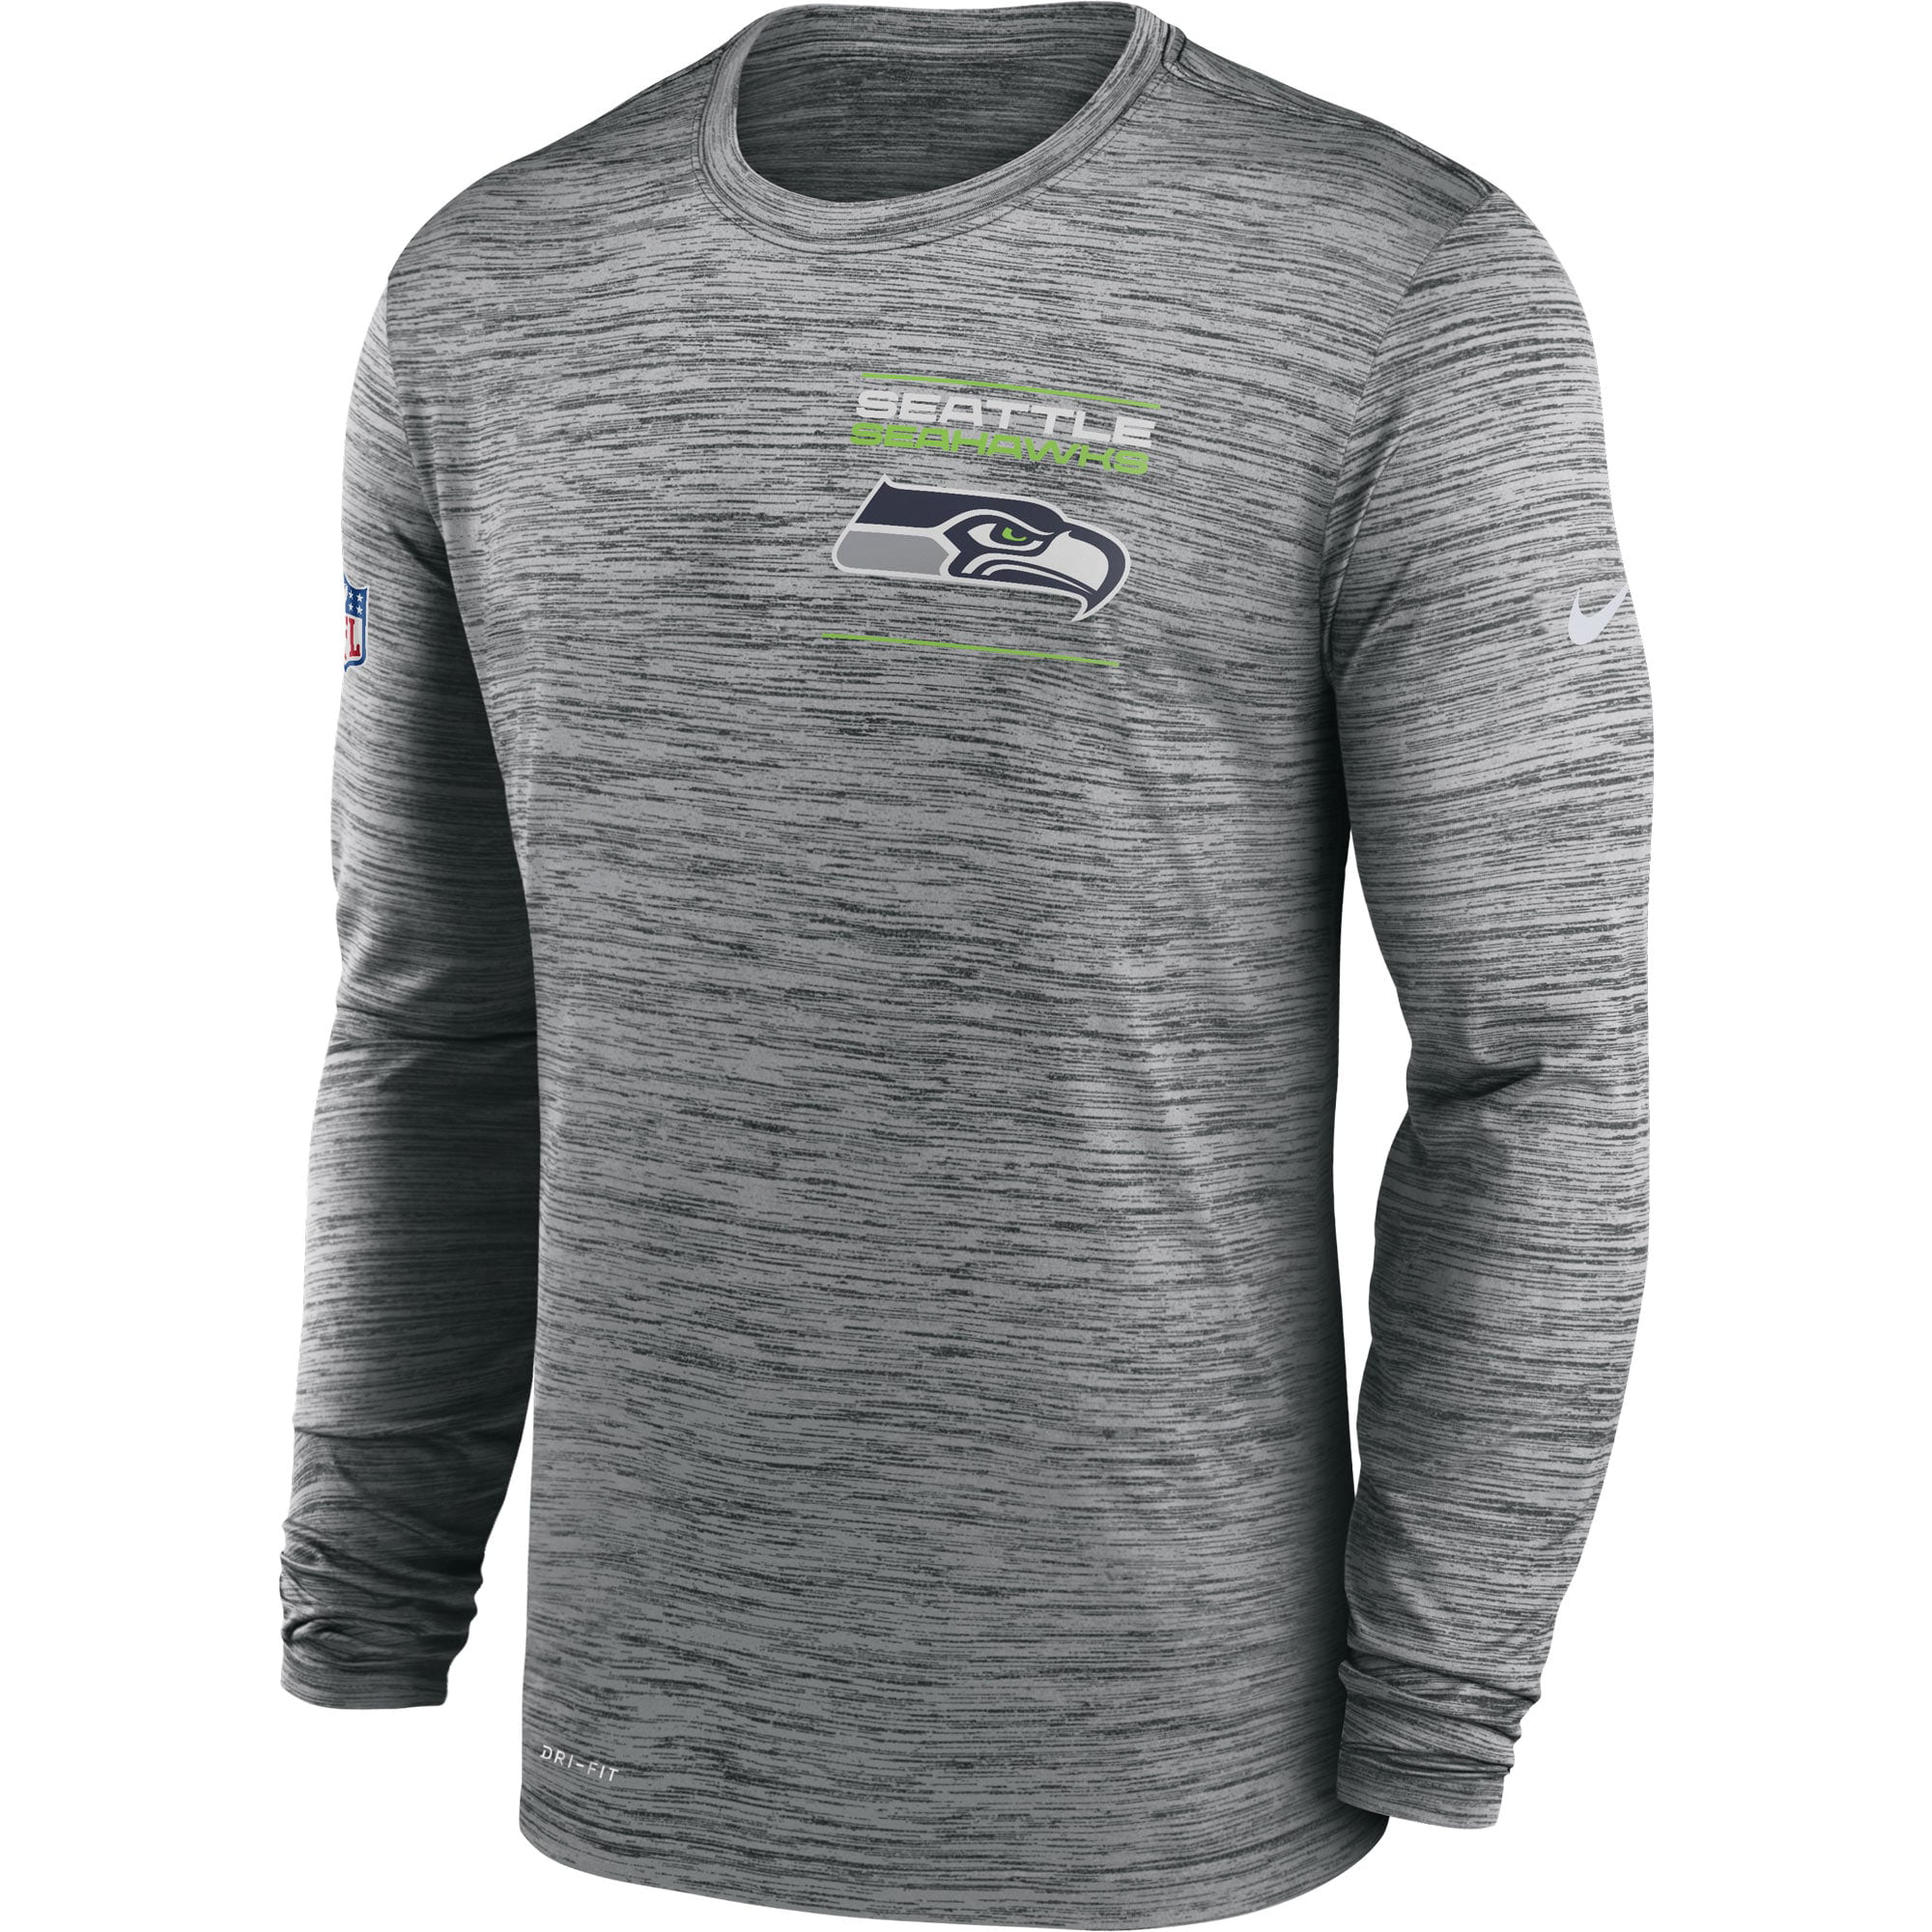 يو لاونج Seattle Seahawks Sideline Legend Authentic Logo Long Sleeve T-Shirt D.Grey علاج احتكاك الرقبة